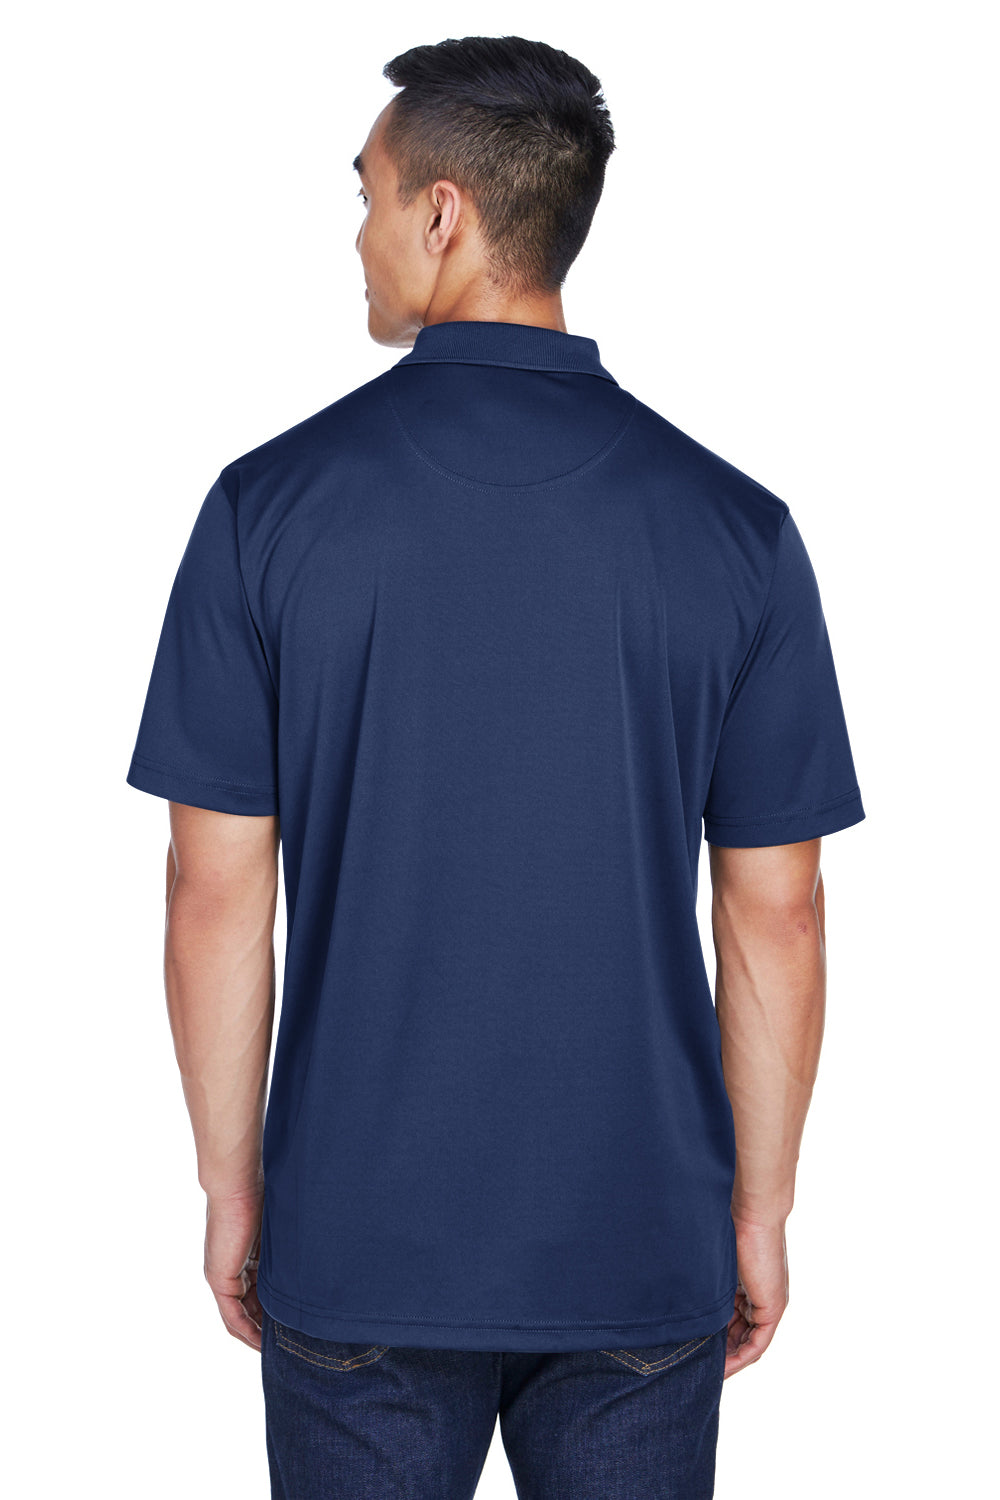 UltraClub 8405 Mens Cool & Dry Moisture Wicking Short Sleeve Polo Shirt Navy Blue Back